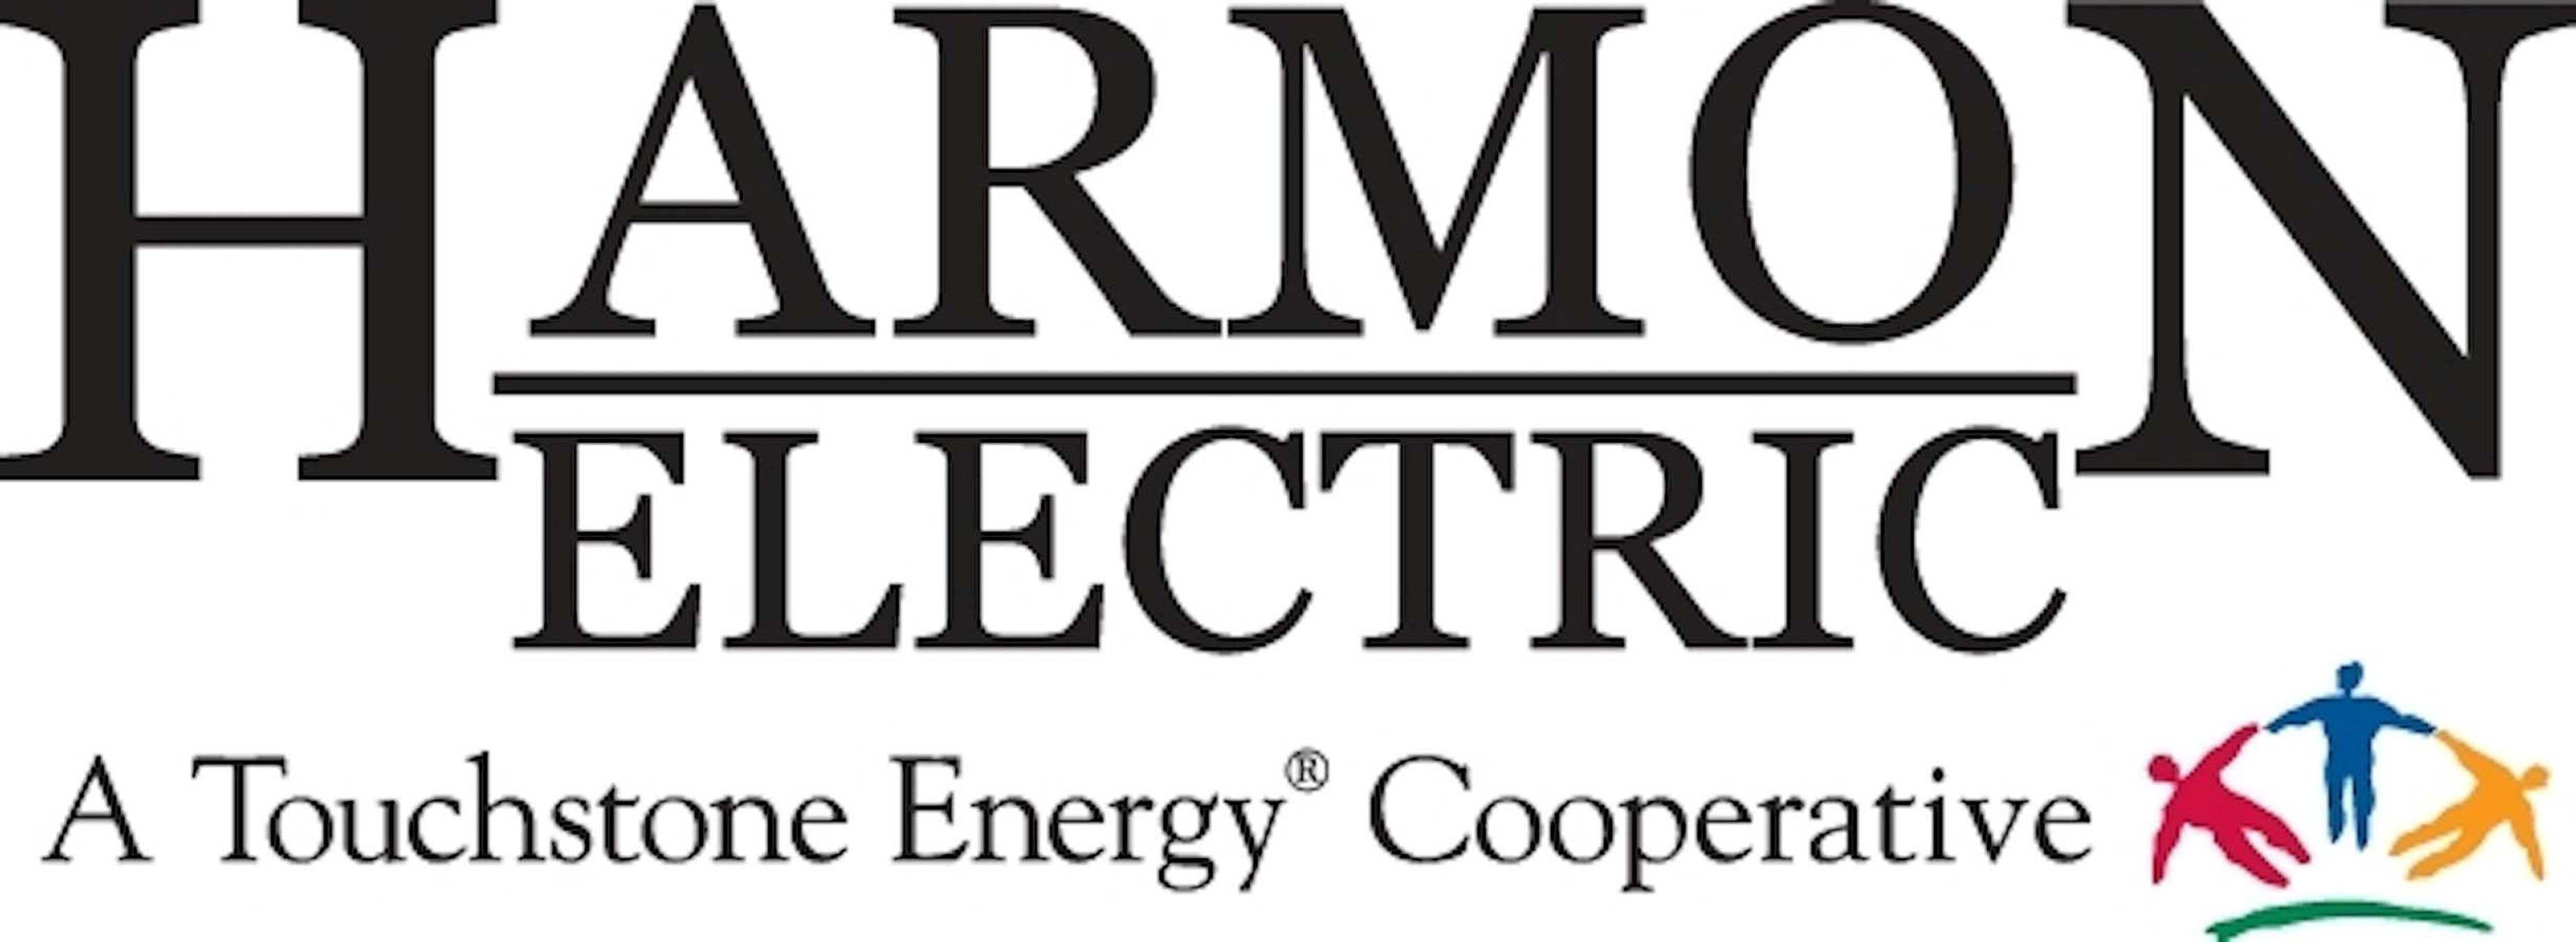 Harmon Logo - Welcome to Harmon Electric. Harmon Electric Association, Inc